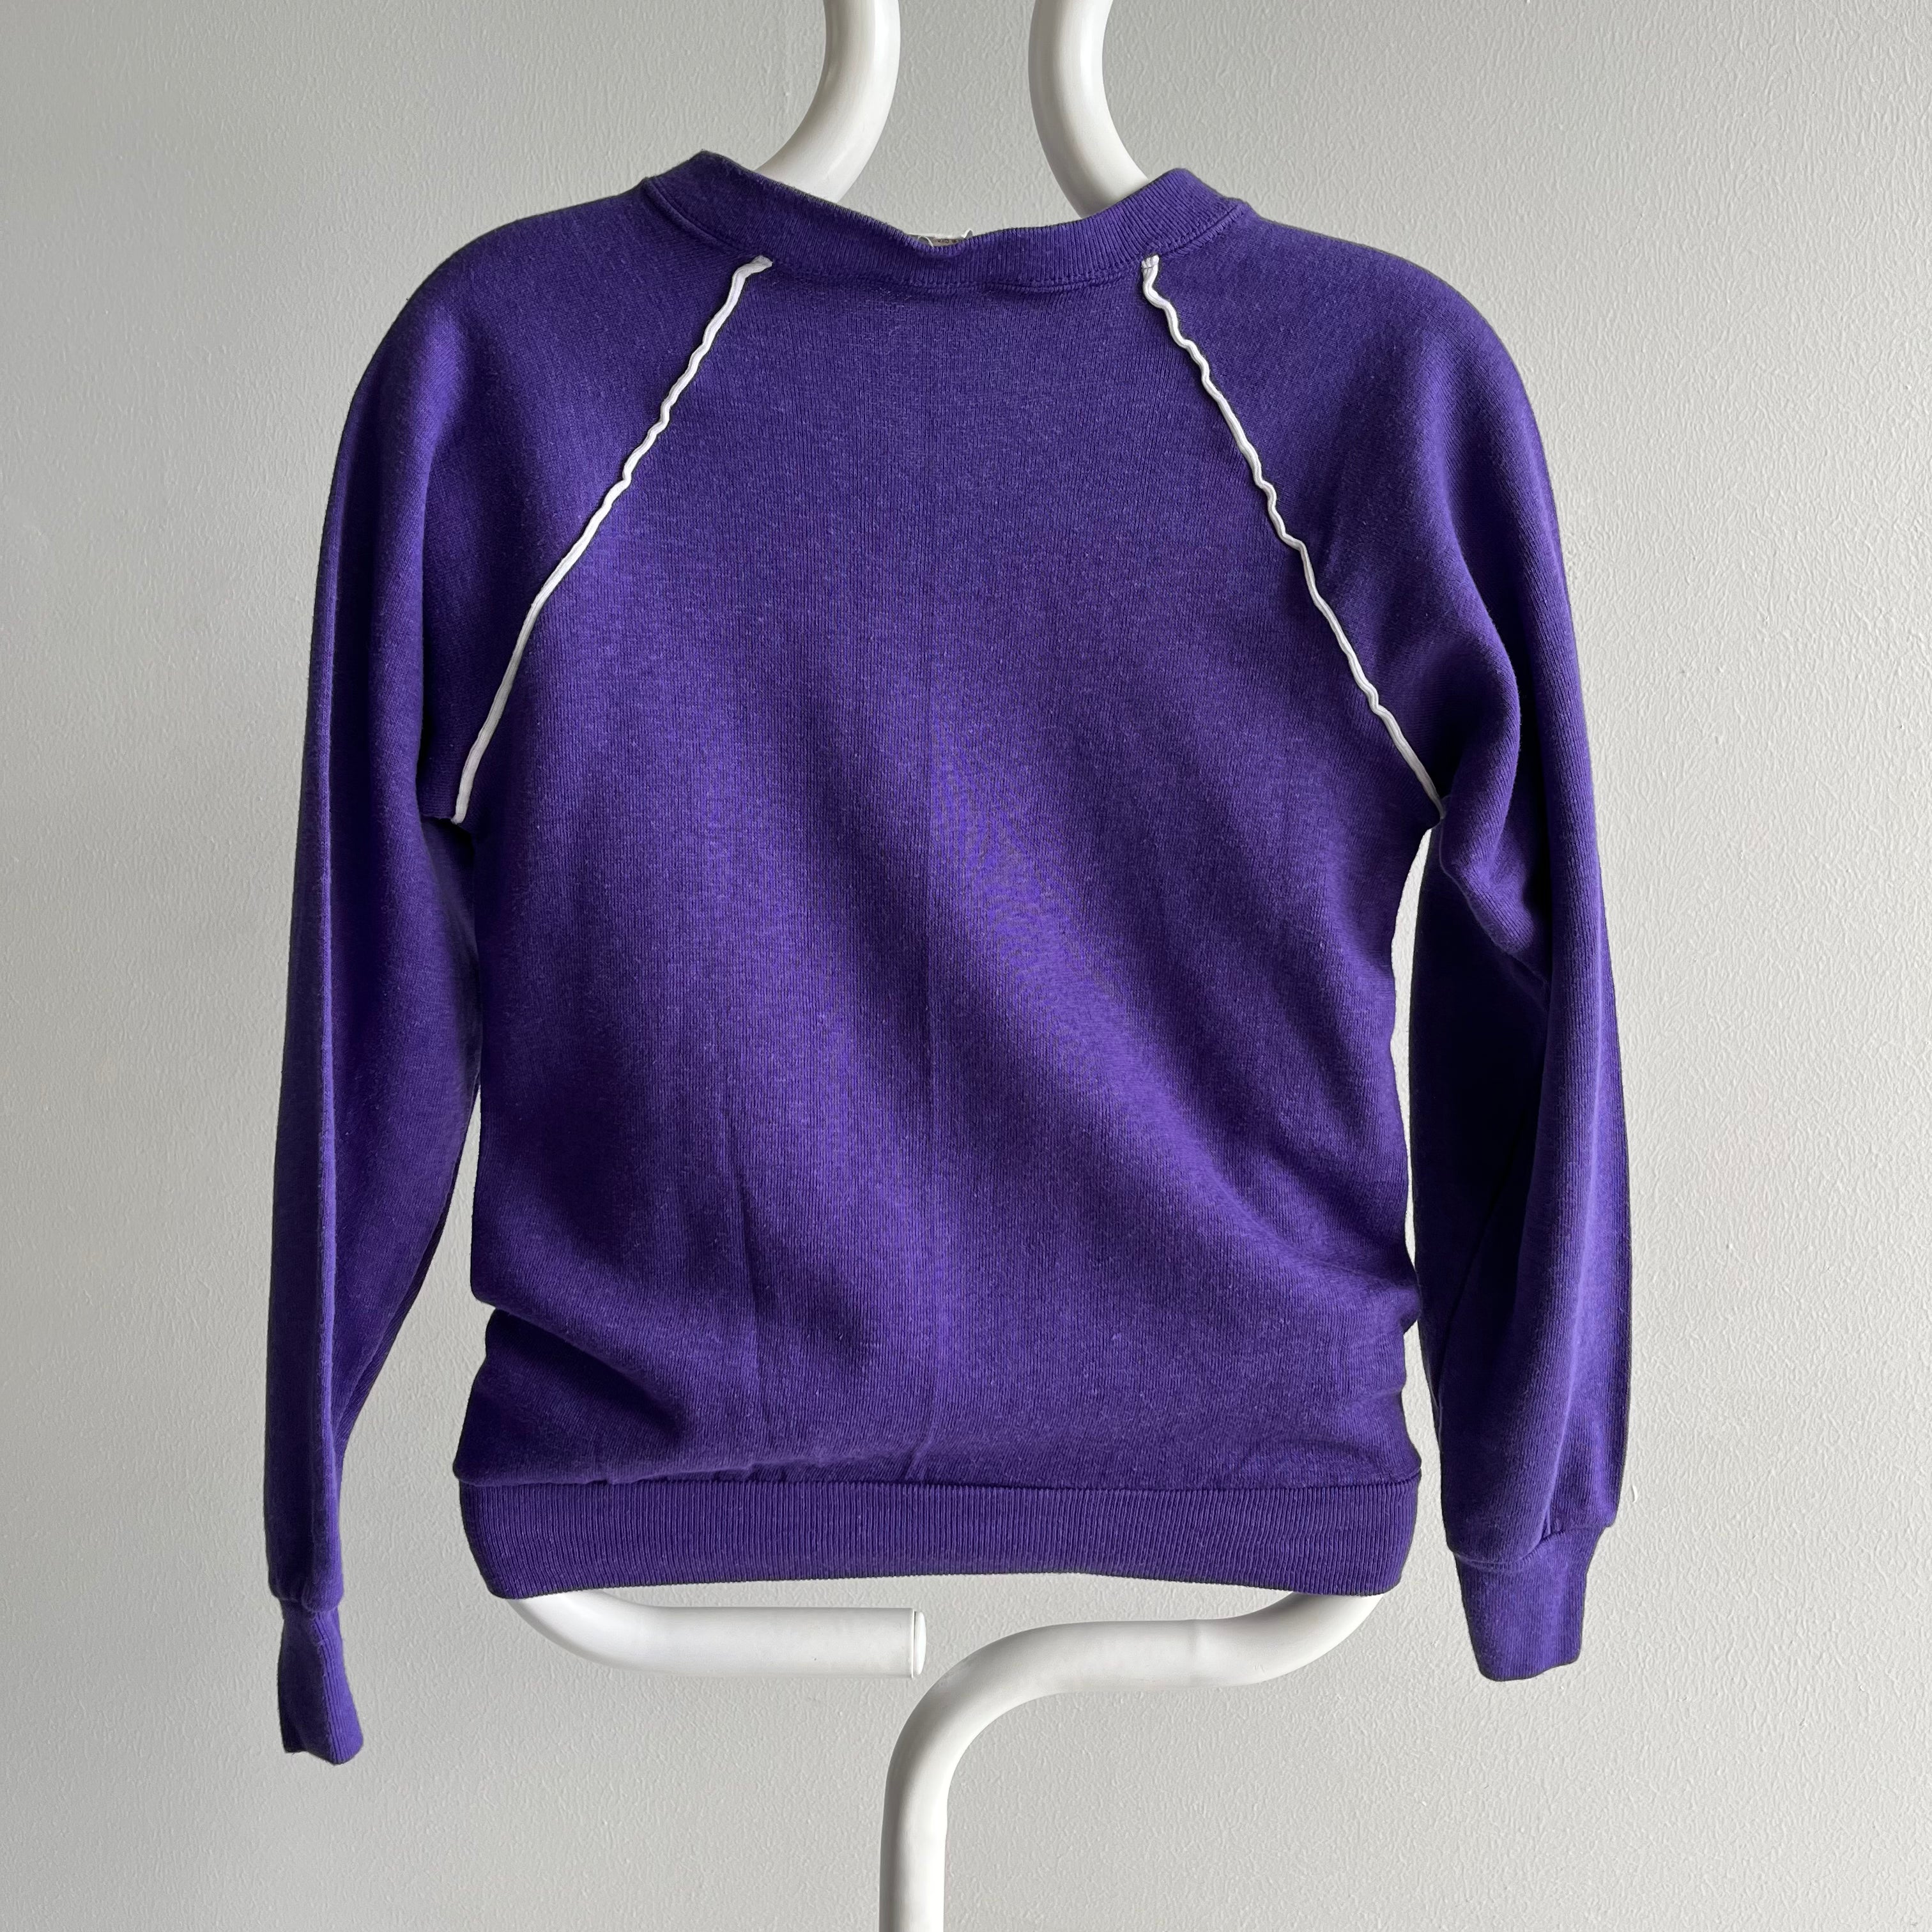 1980s New Old Stock (Never Worn) Purple V-Neck Sweatshirt